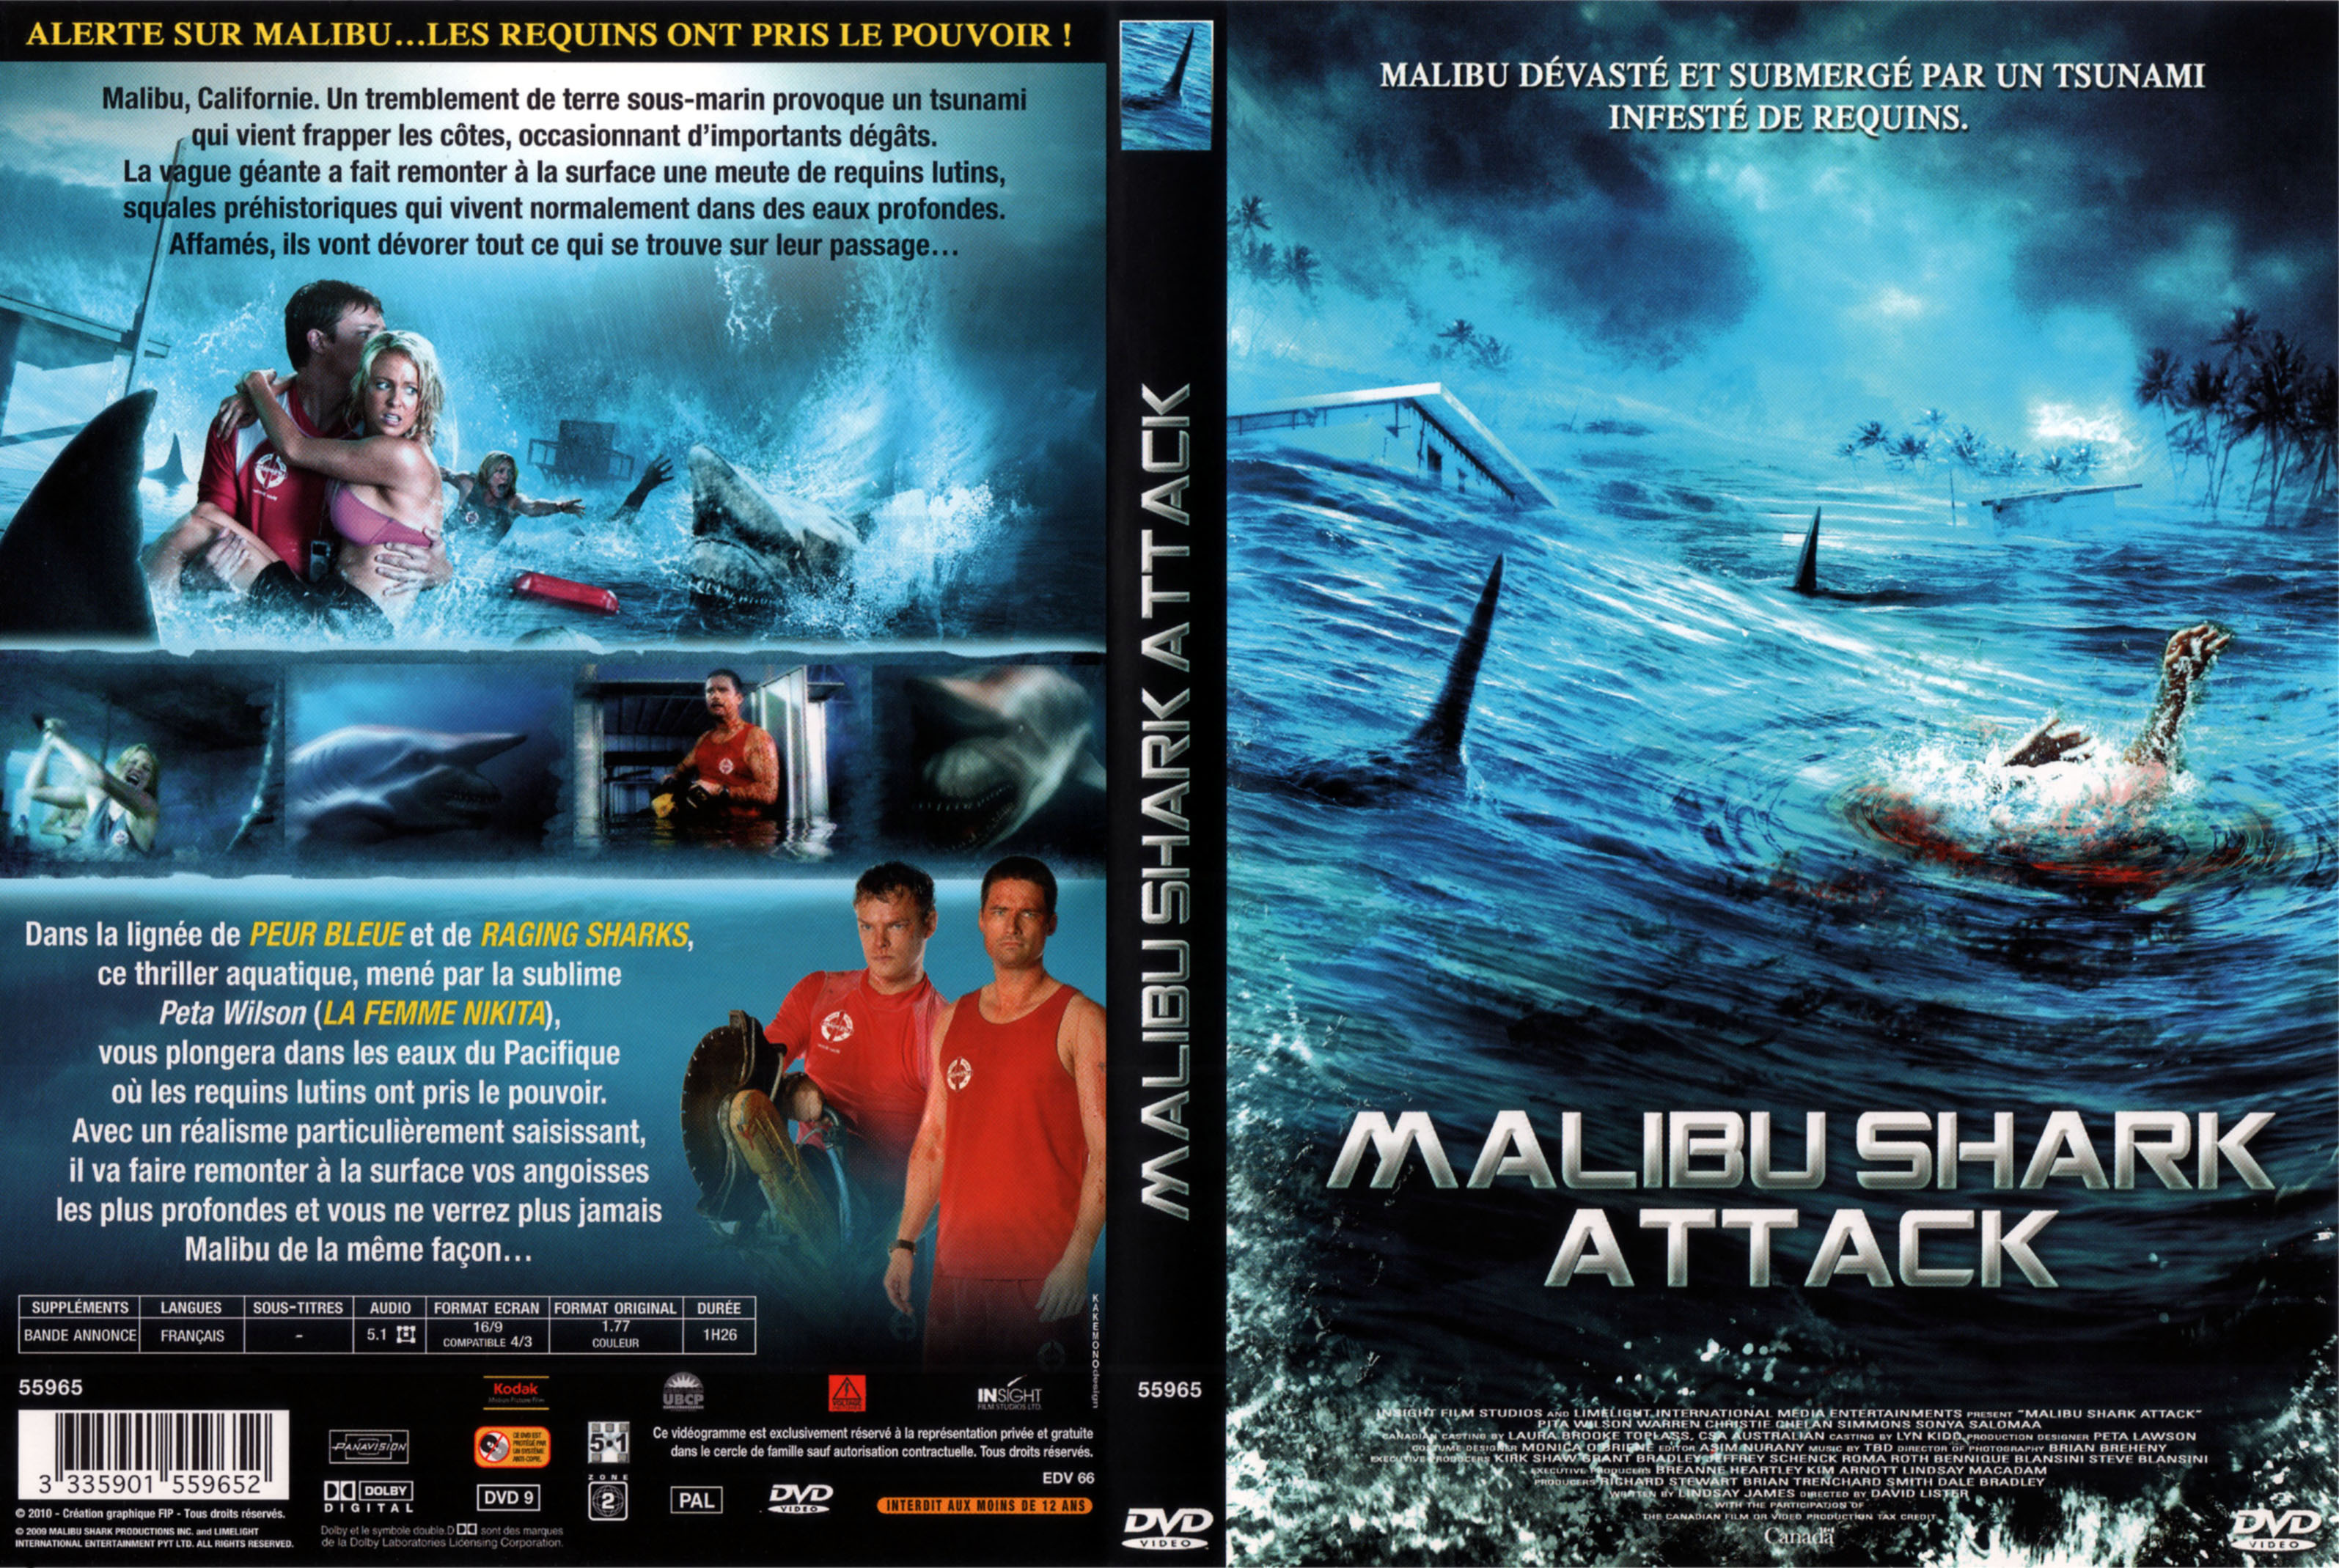 Jaquette DVD Malibu shark attack